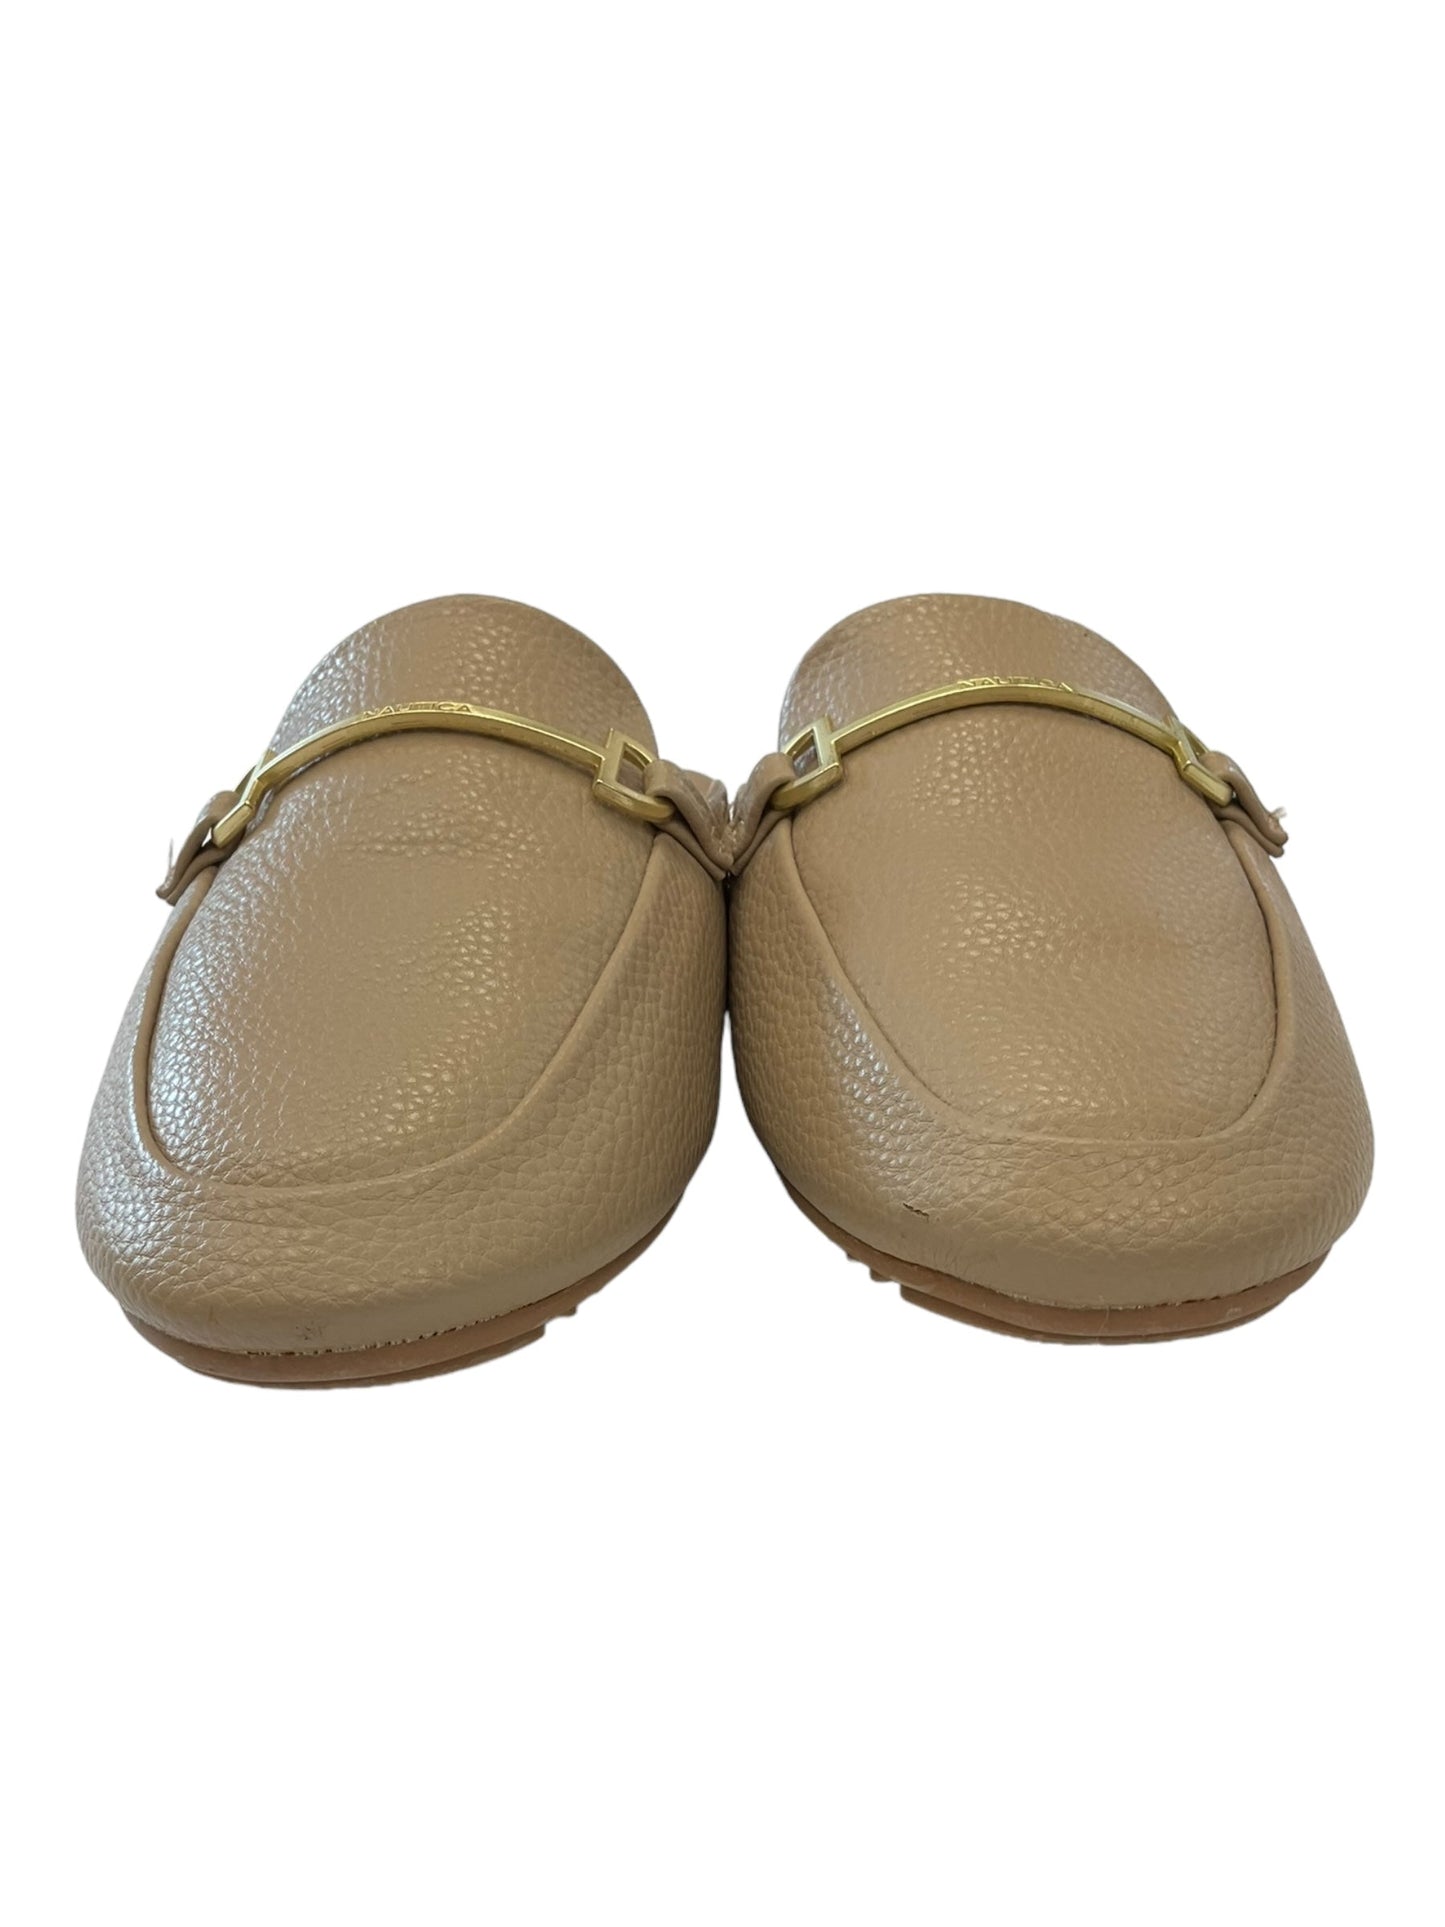 Beige Shoes Flats Nautica, Size 7.5